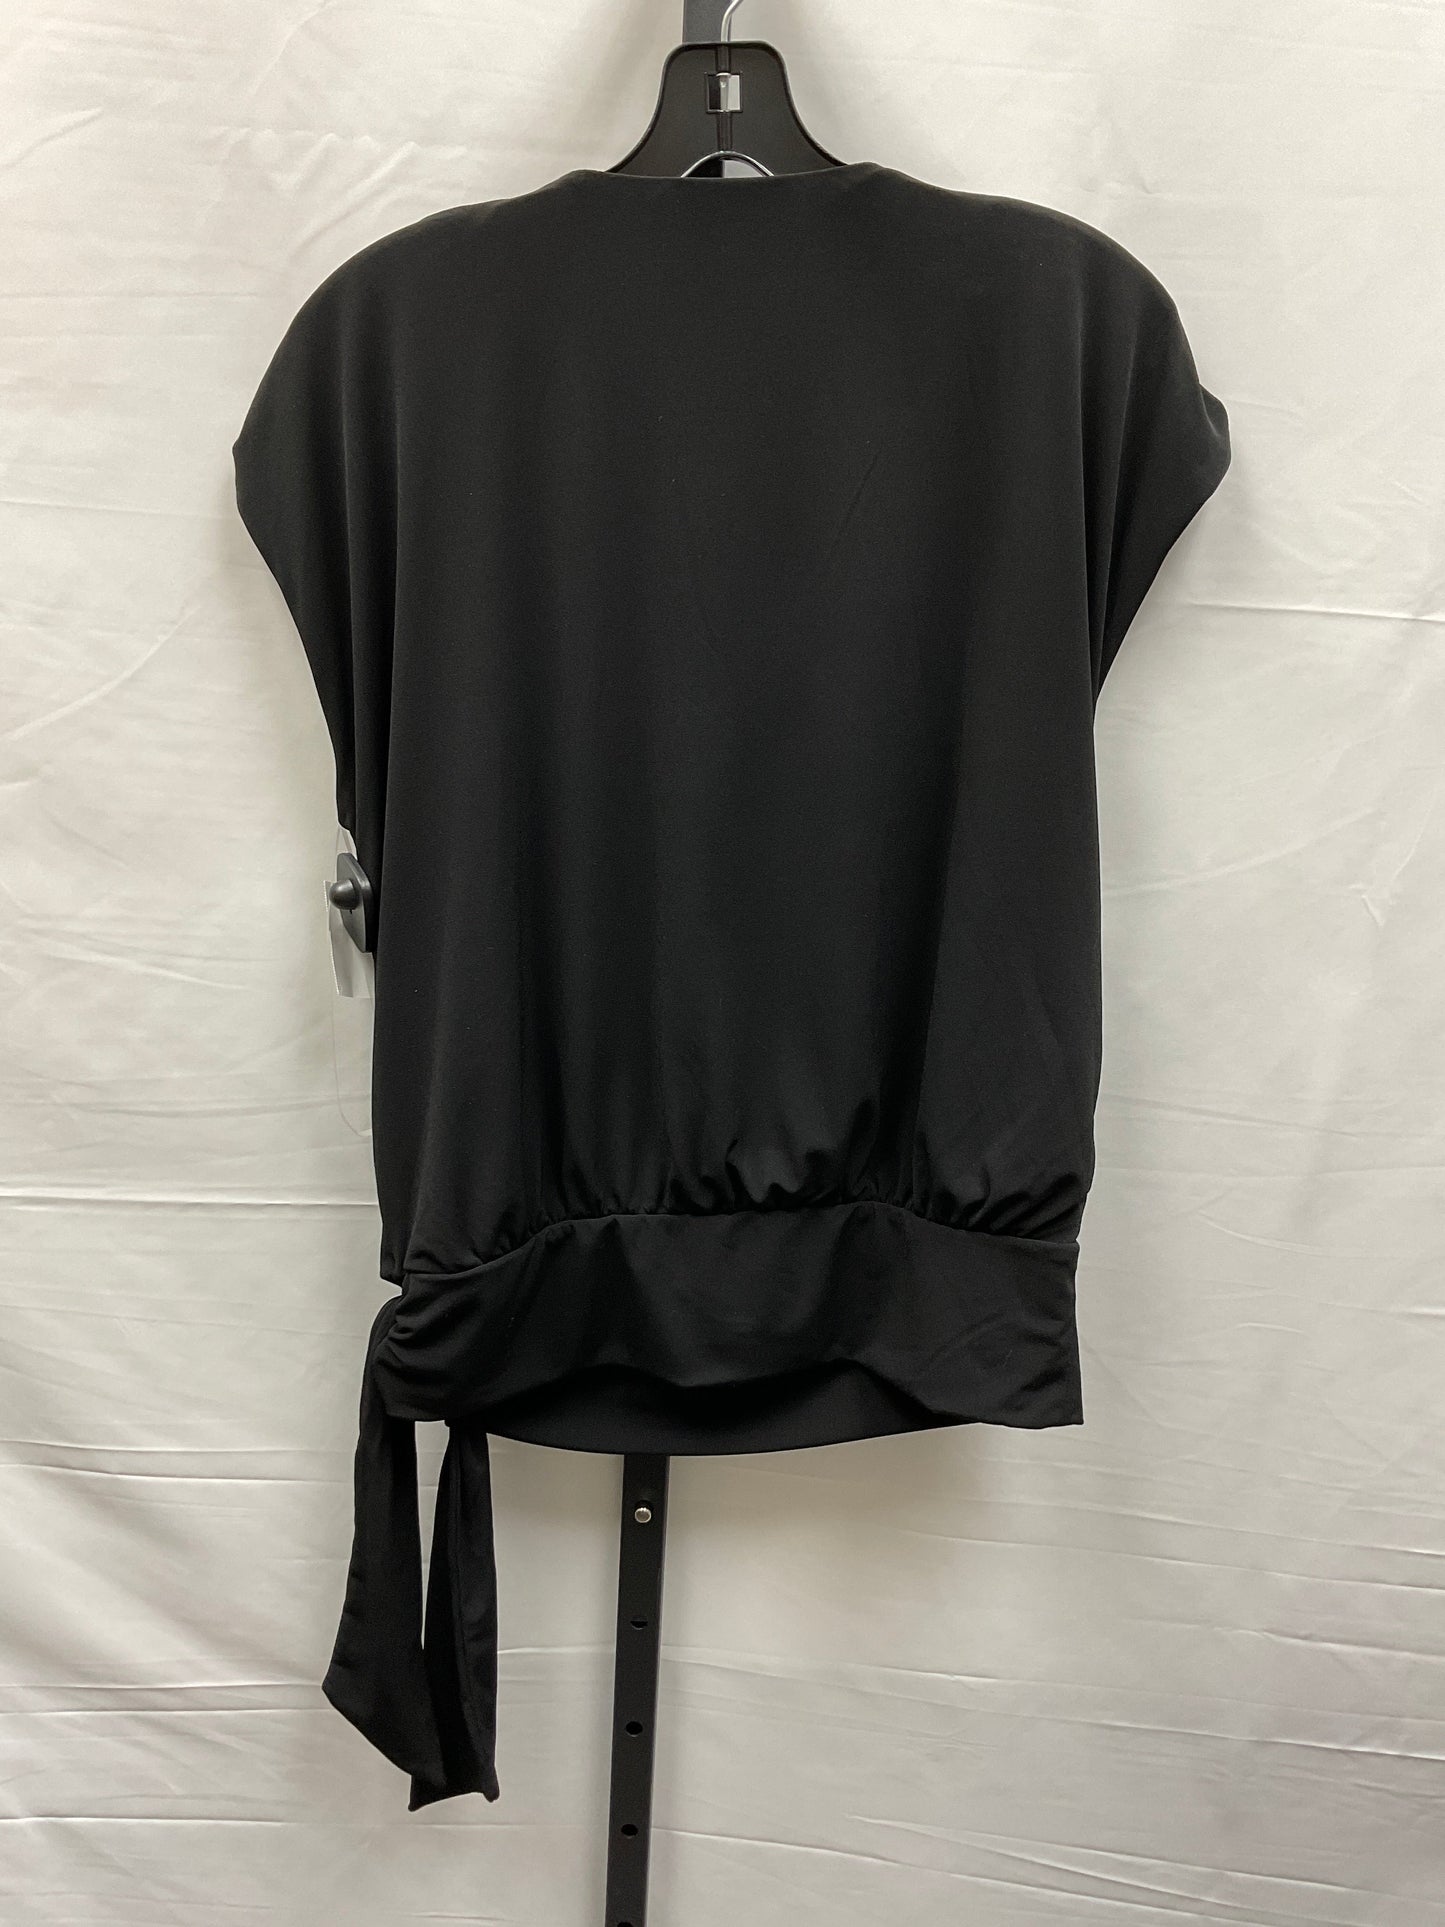 Black Top Short Sleeve Inc, Size M